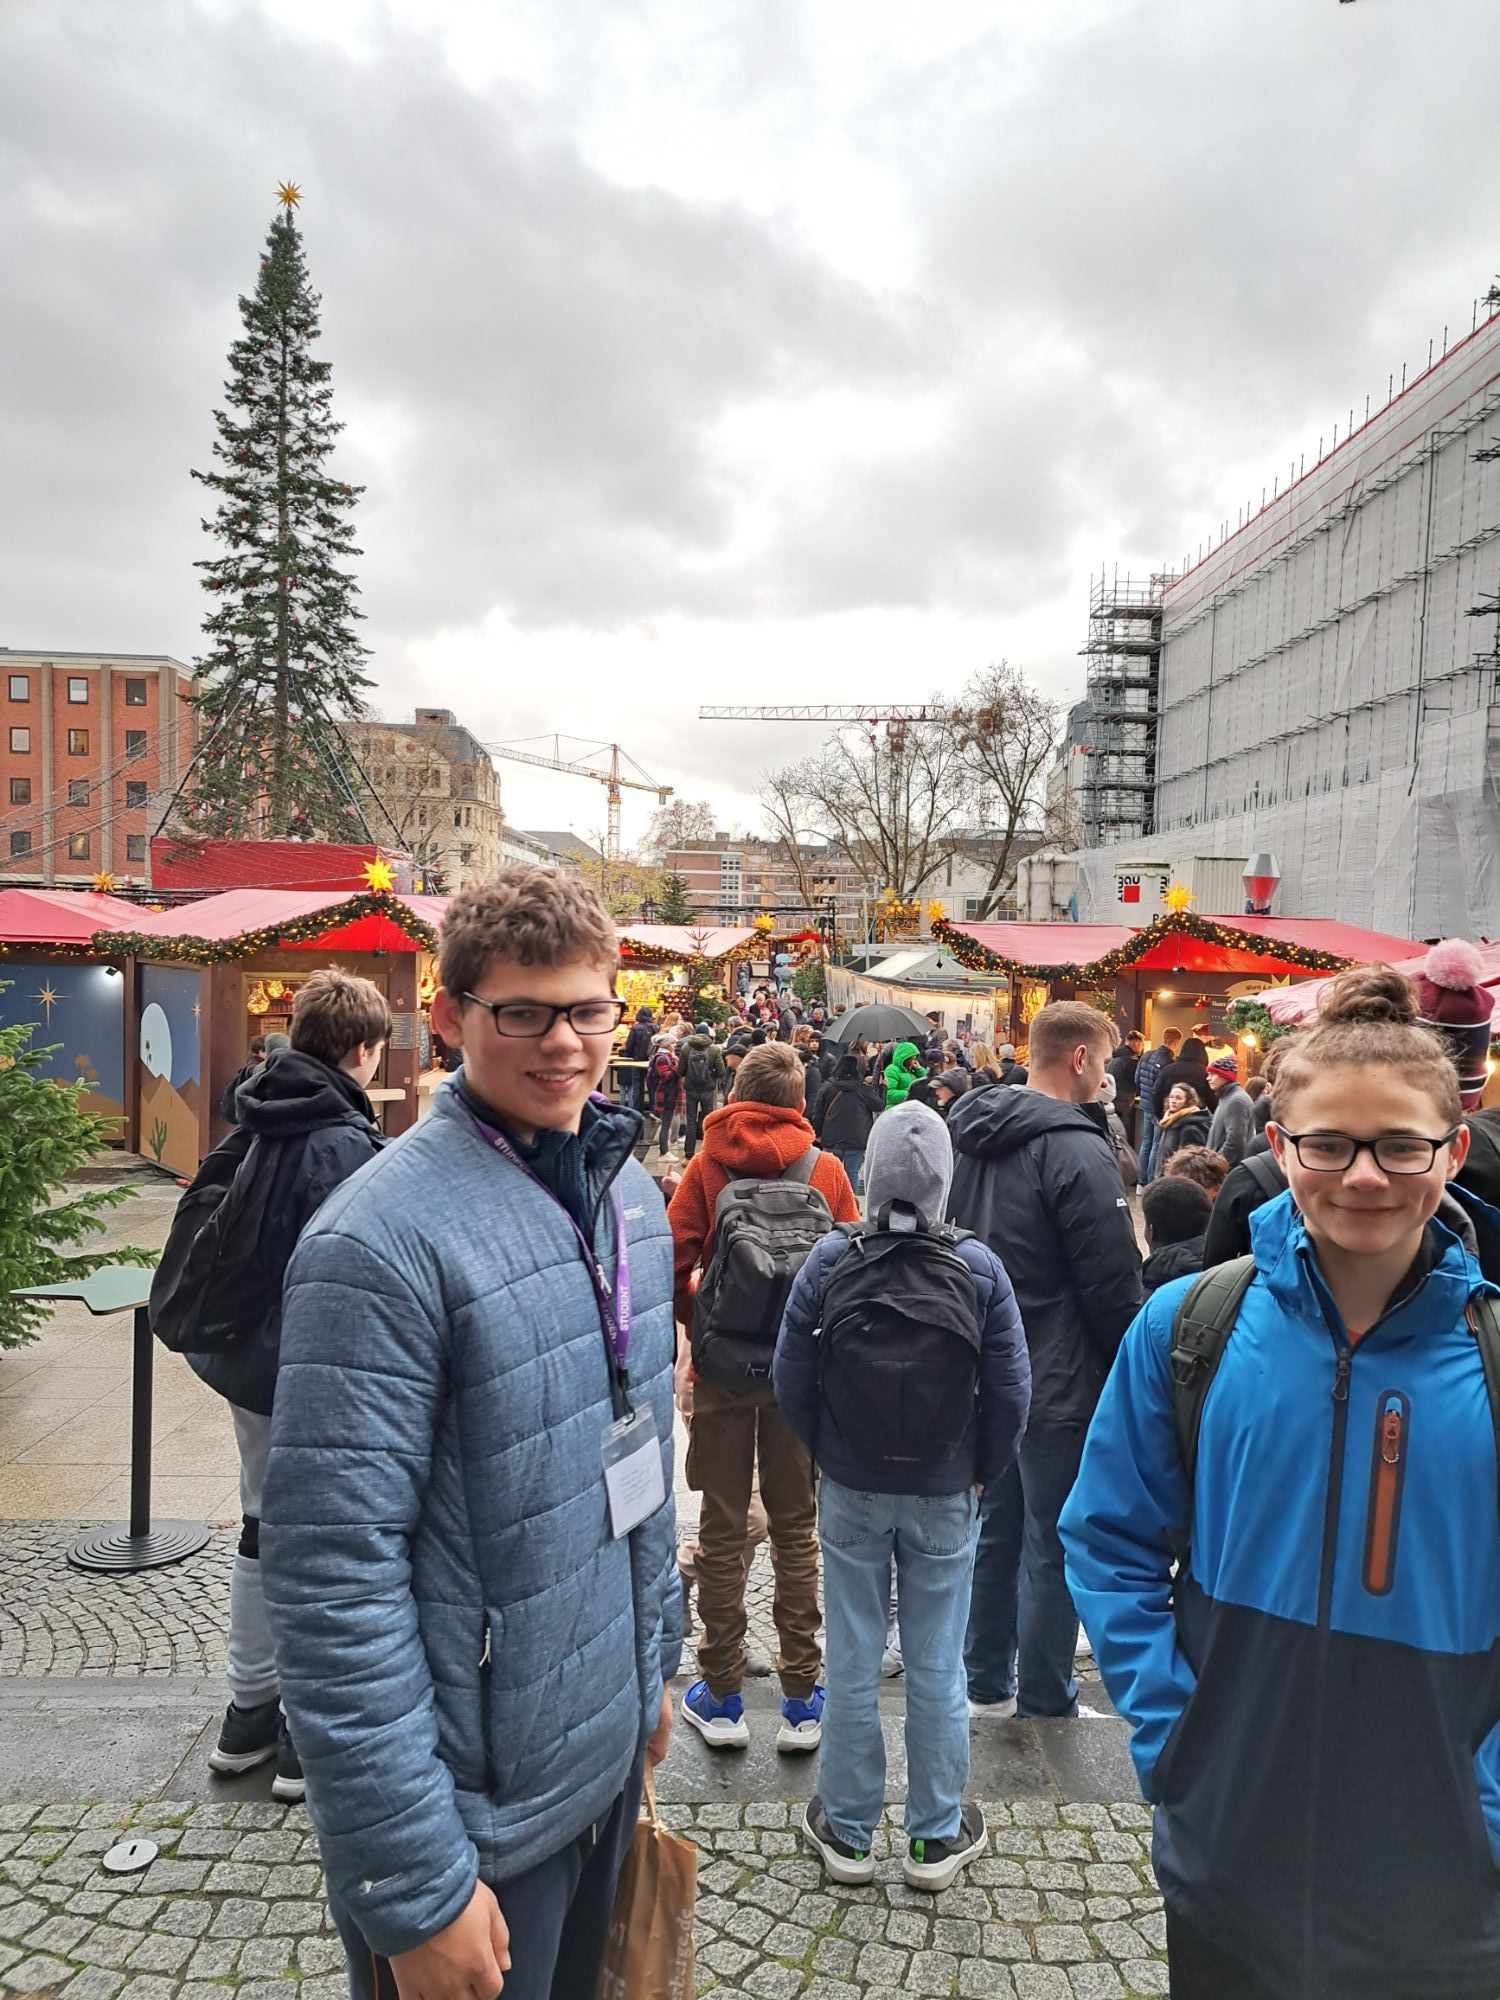 Trip to Cologne - German Christmas Market